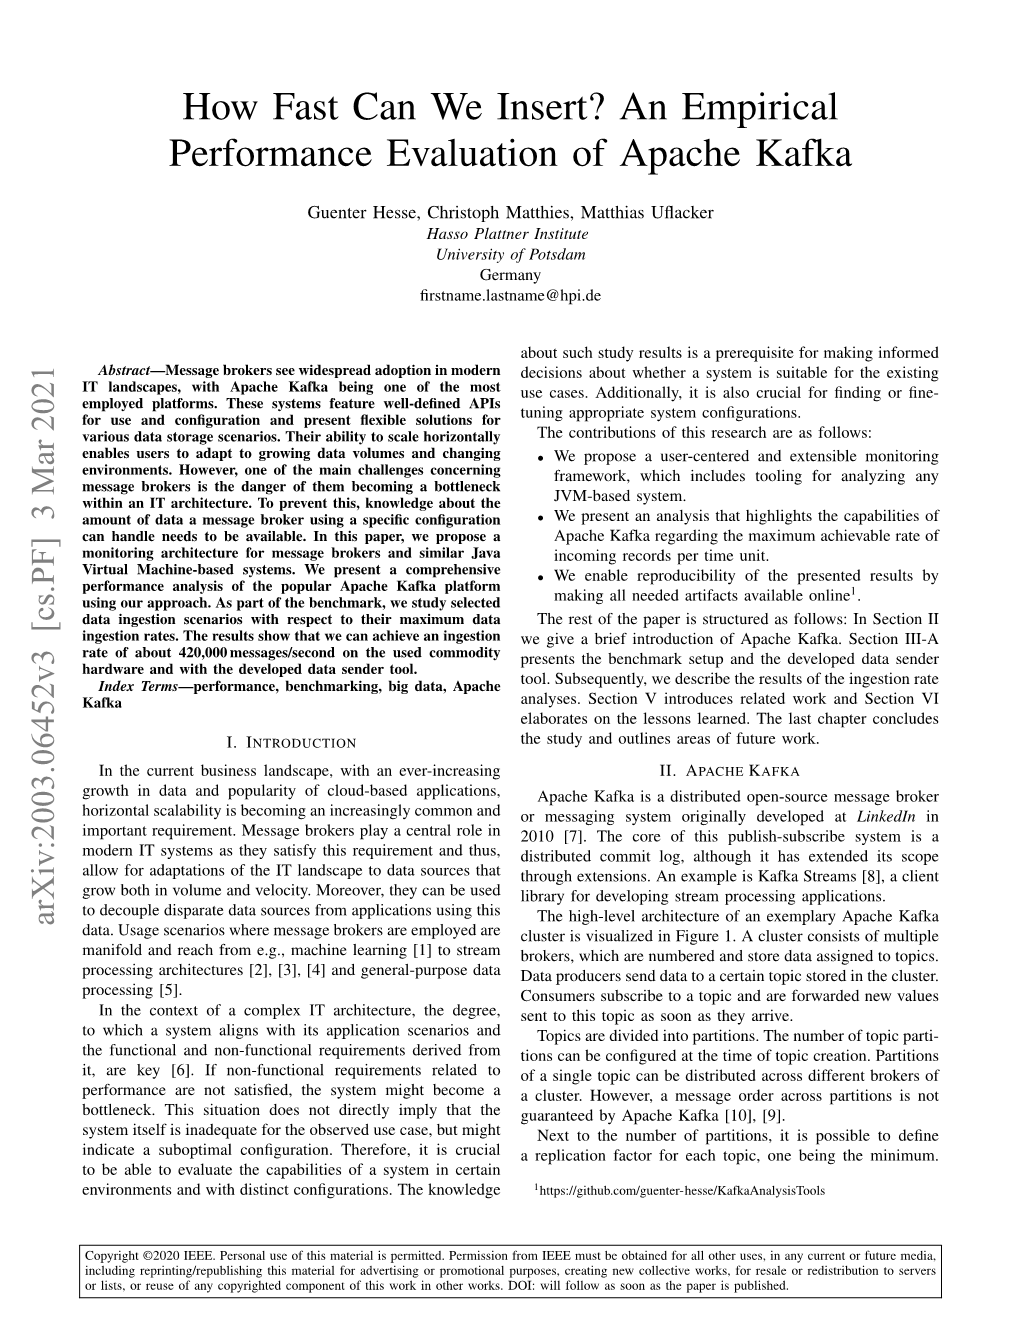 An Empirical Performance Evaluation of Apache Kafka